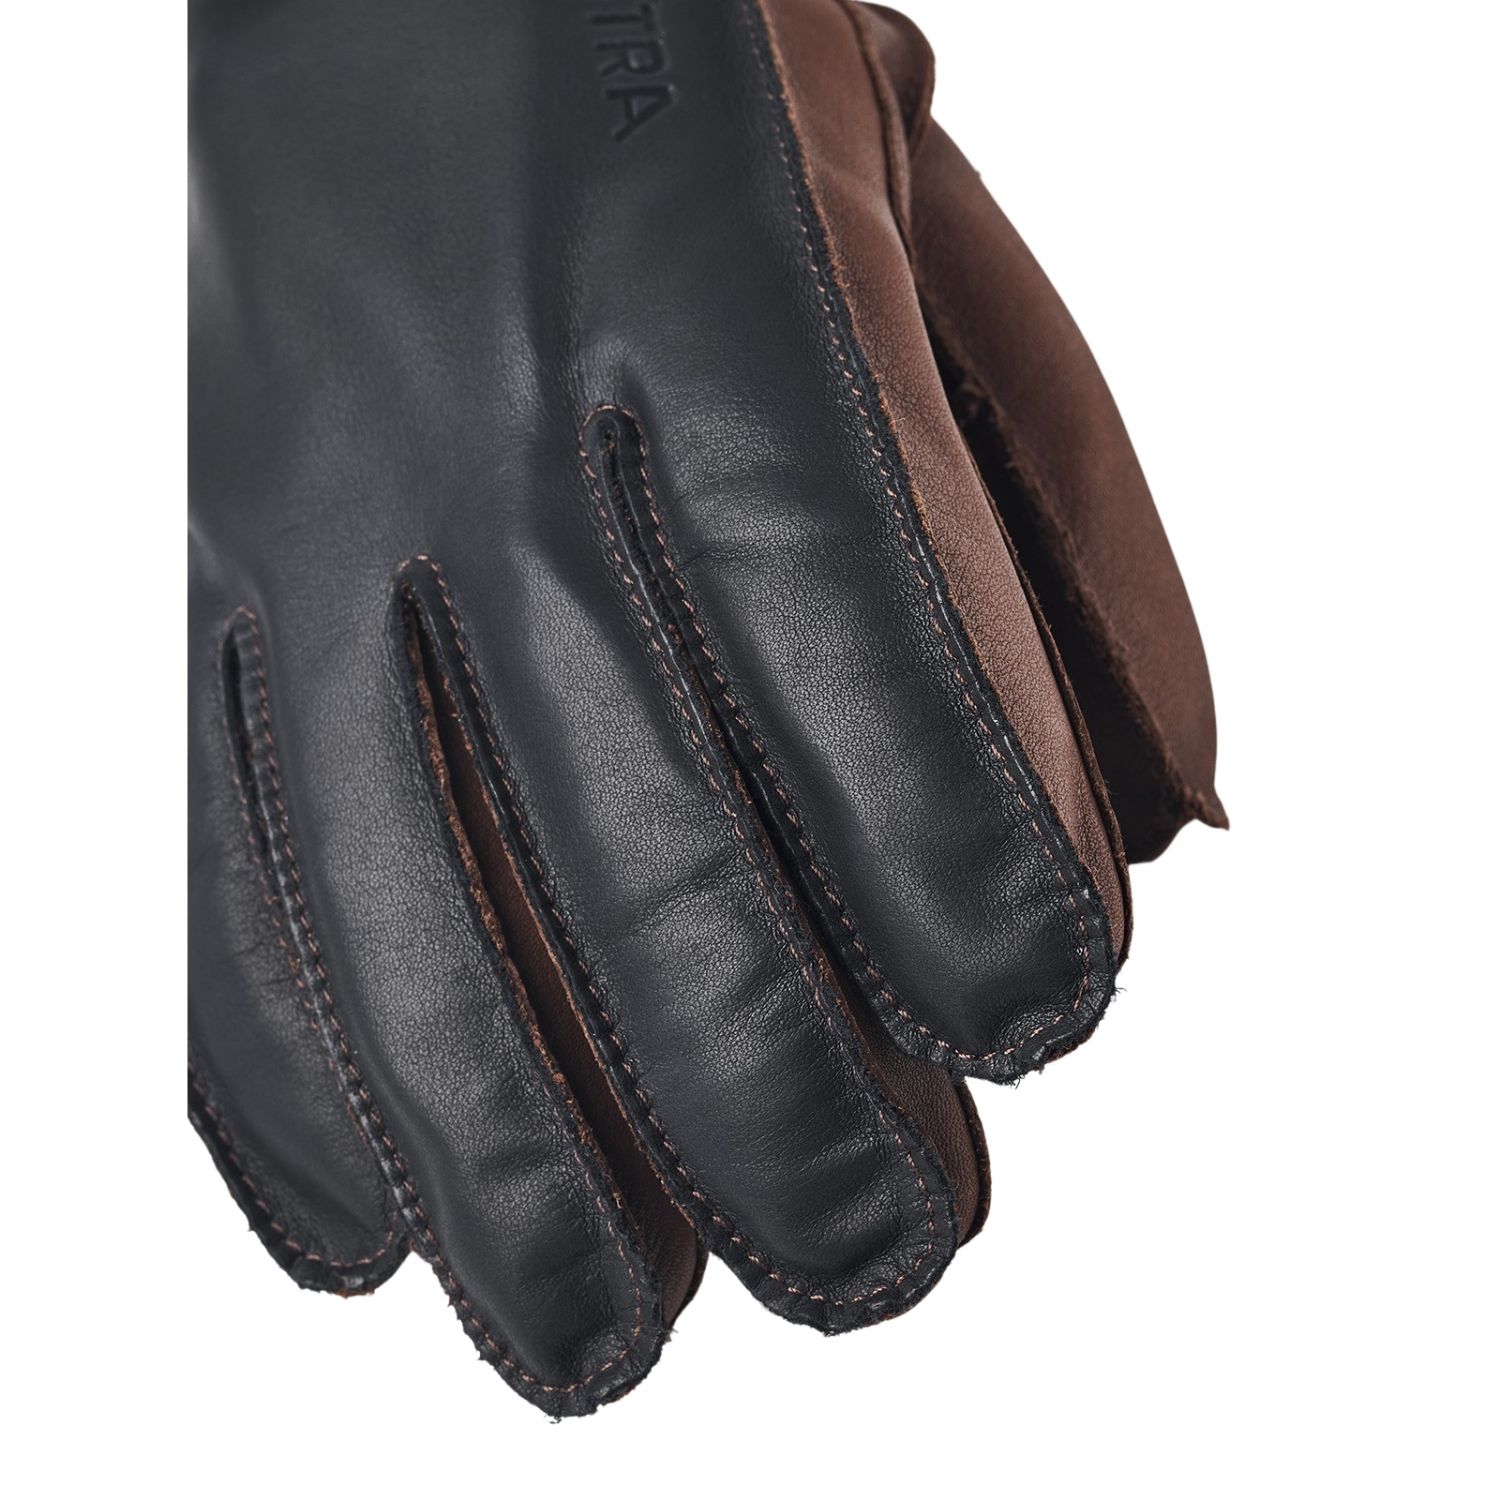 Hestra Wakayama, gants, navy/marron